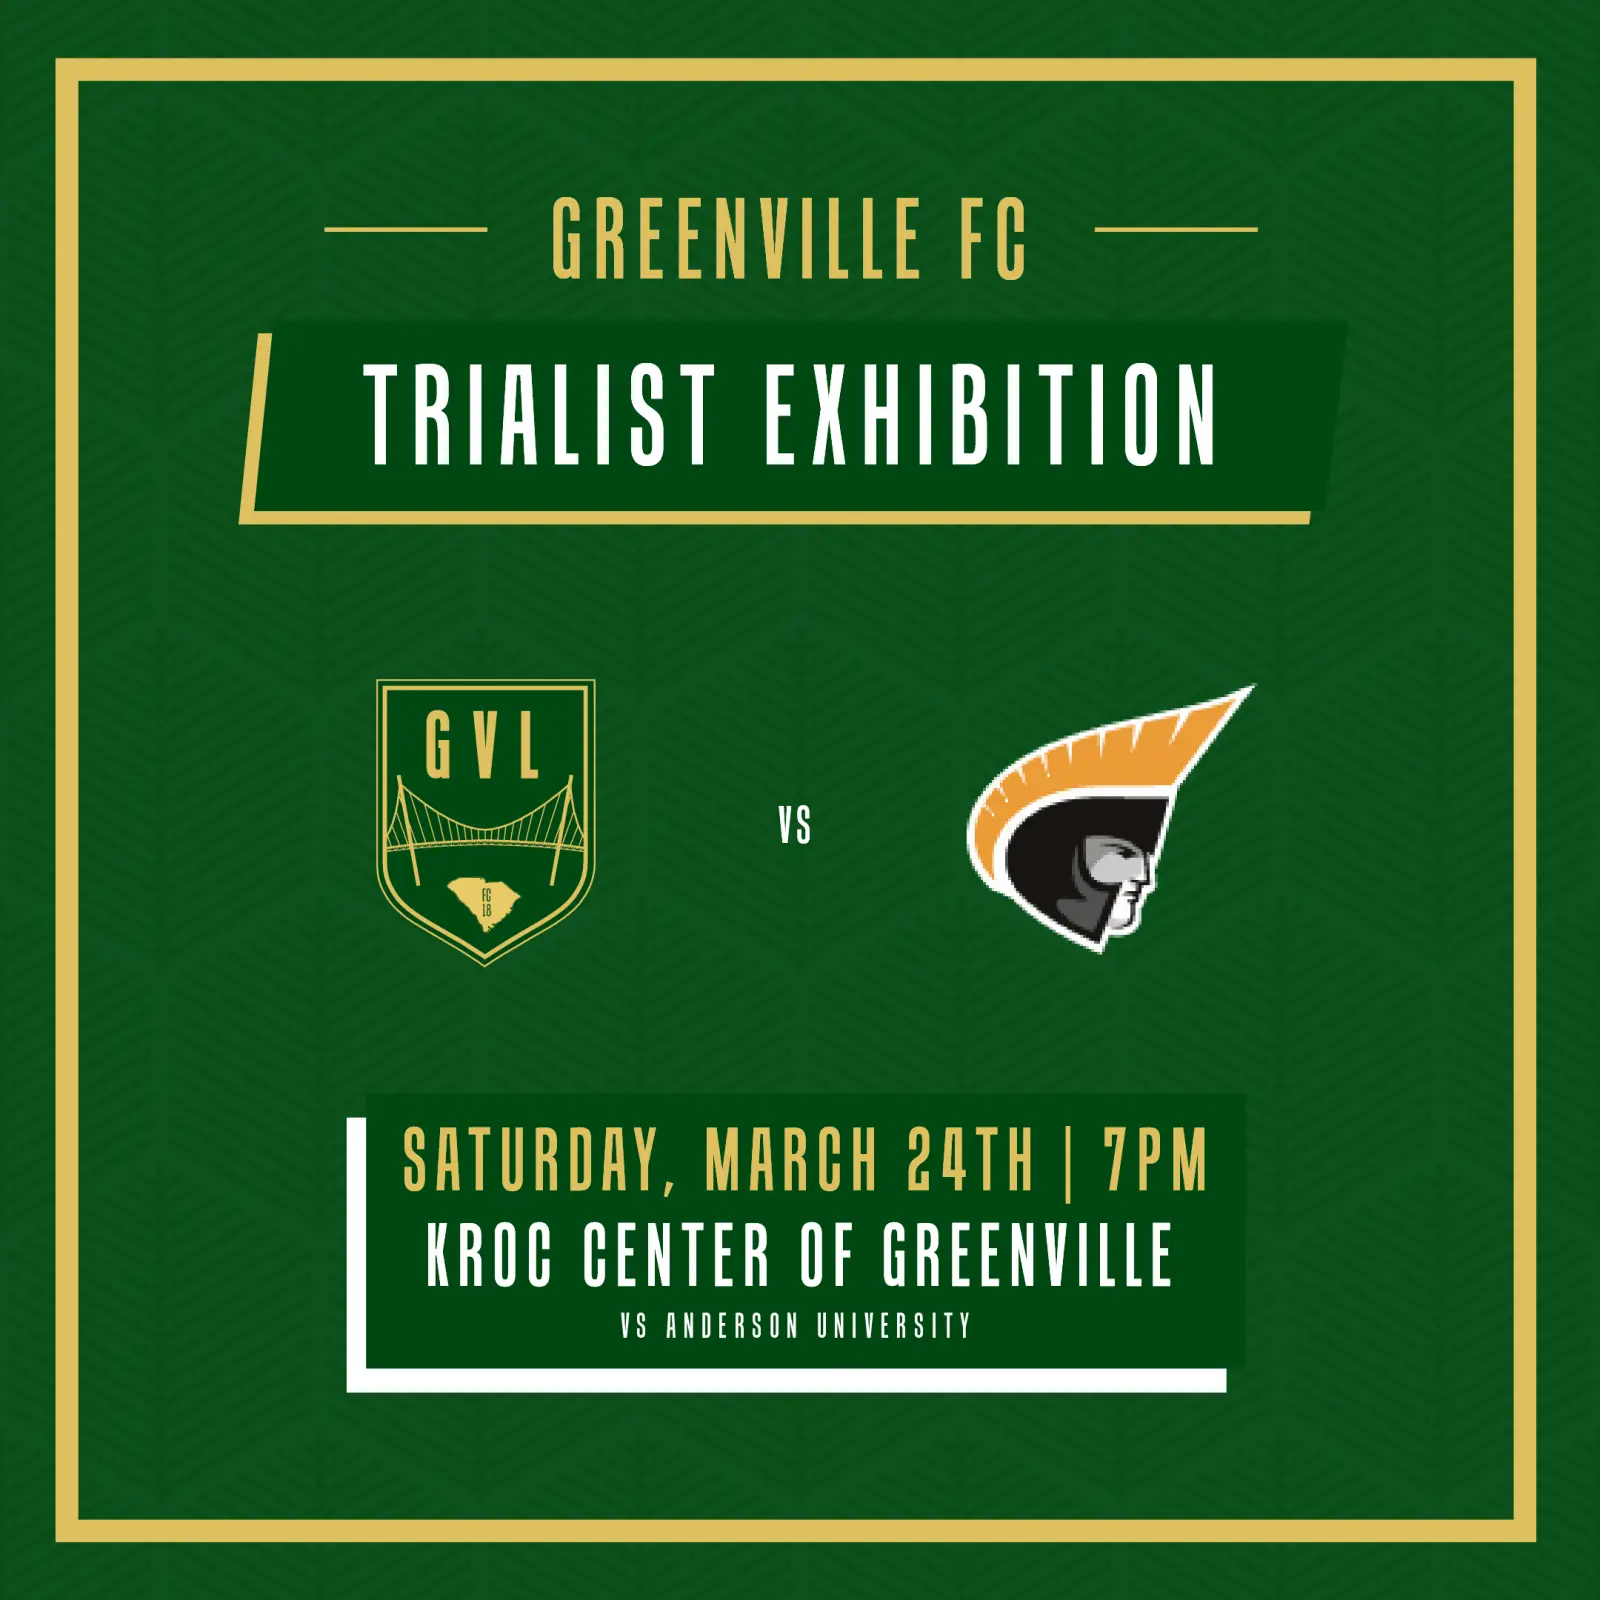 greenville EVENT ALERT: GREENVILLE FC TRIALIST EXHIBITION MATCH